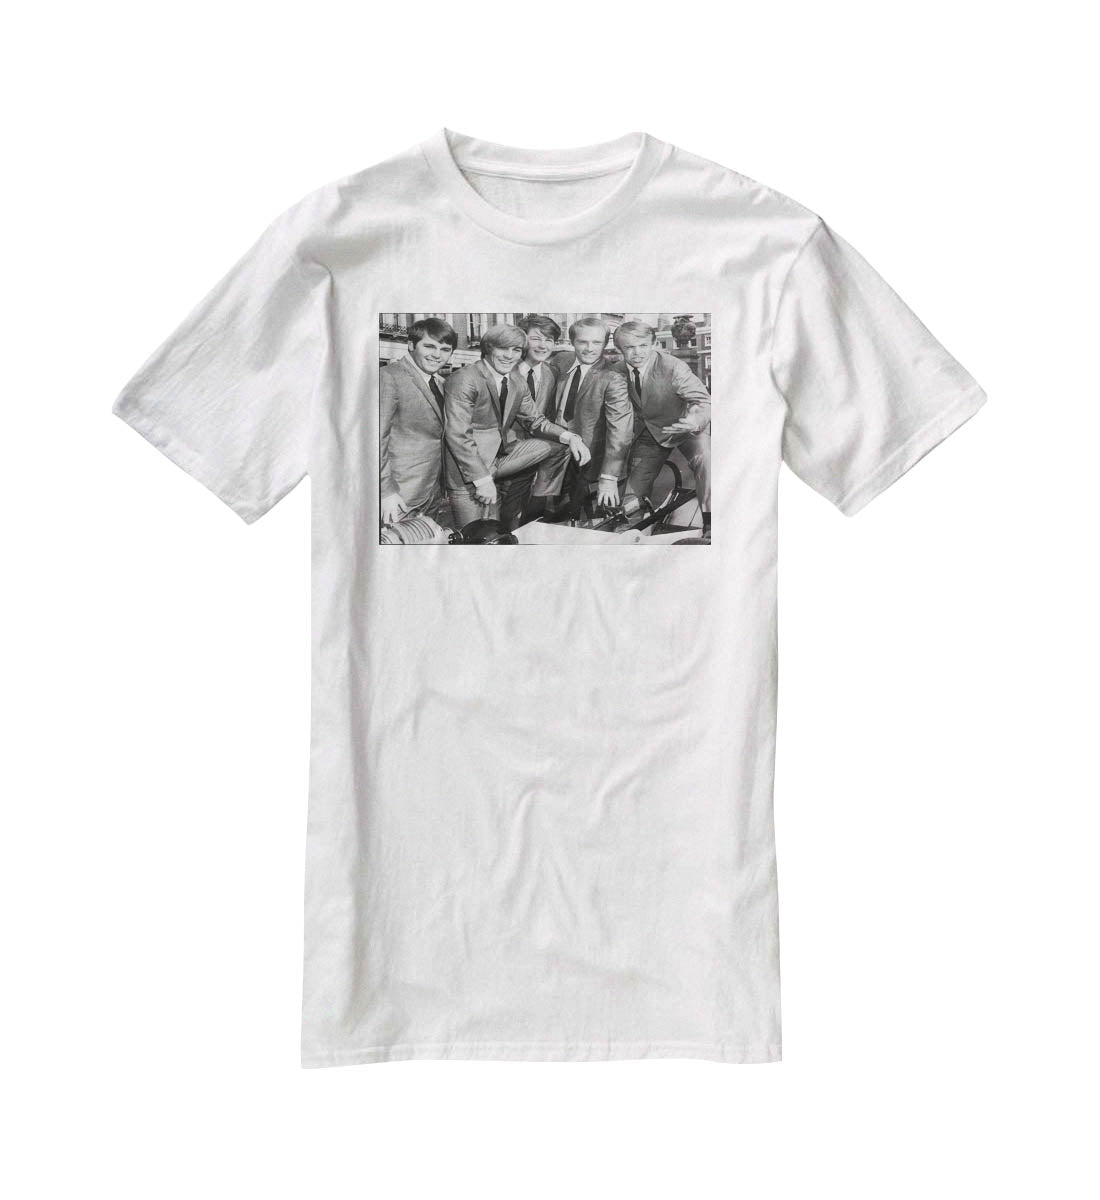 Beach Boys in suits T-Shirt - Canvas Art Rocks - 5